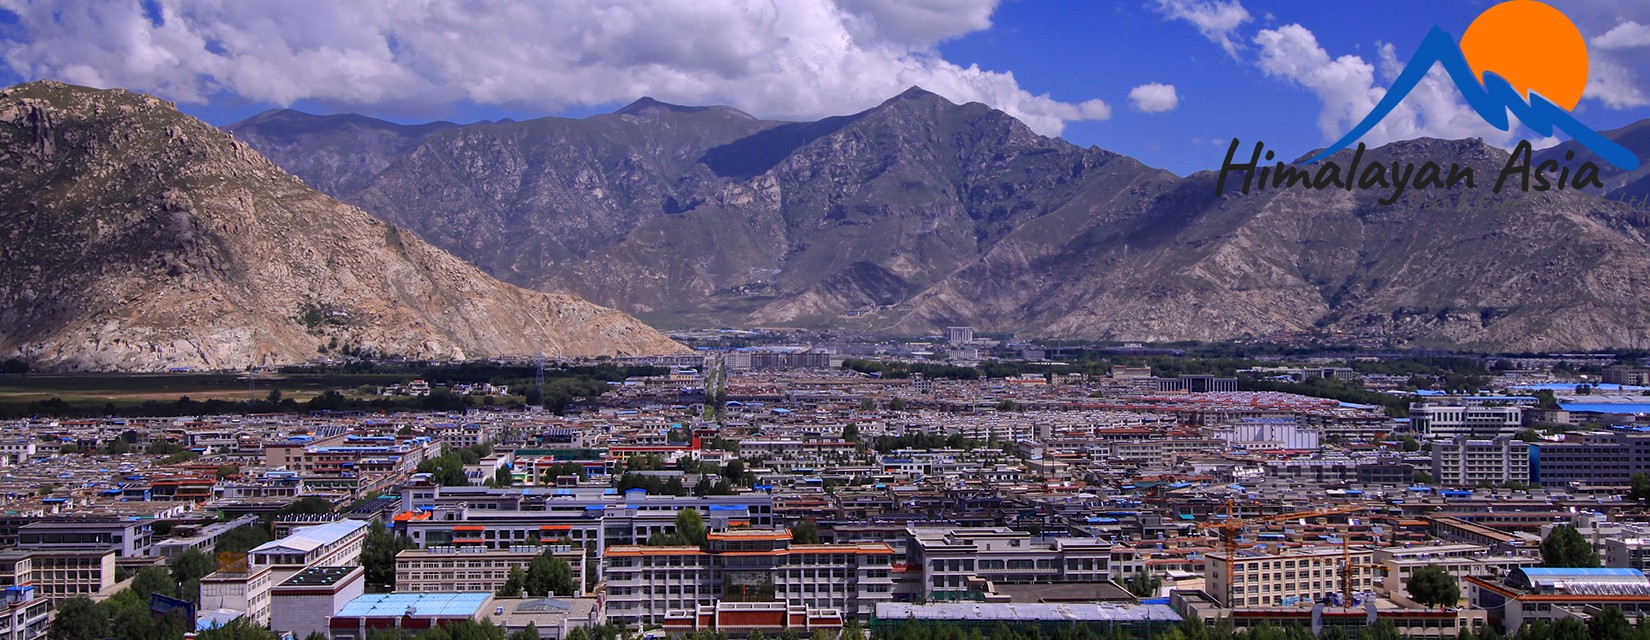 Lhasa-City